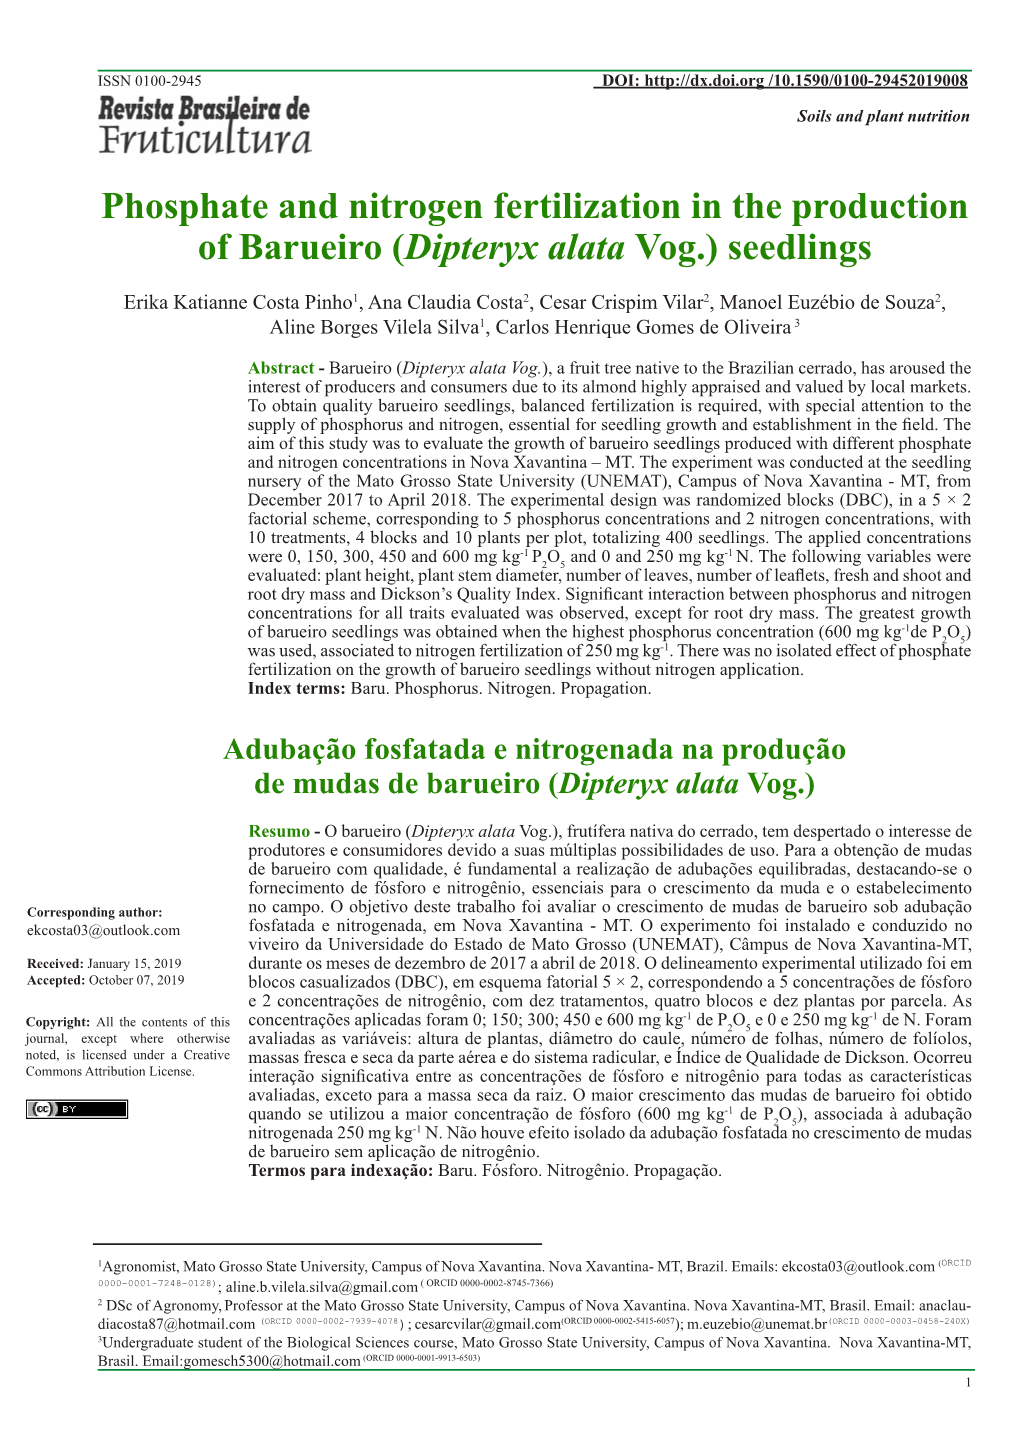 Phosphate and Nitrogen Fertilization in the Production of Barueiro (Dipteryx Alata Vog.) Seedlings